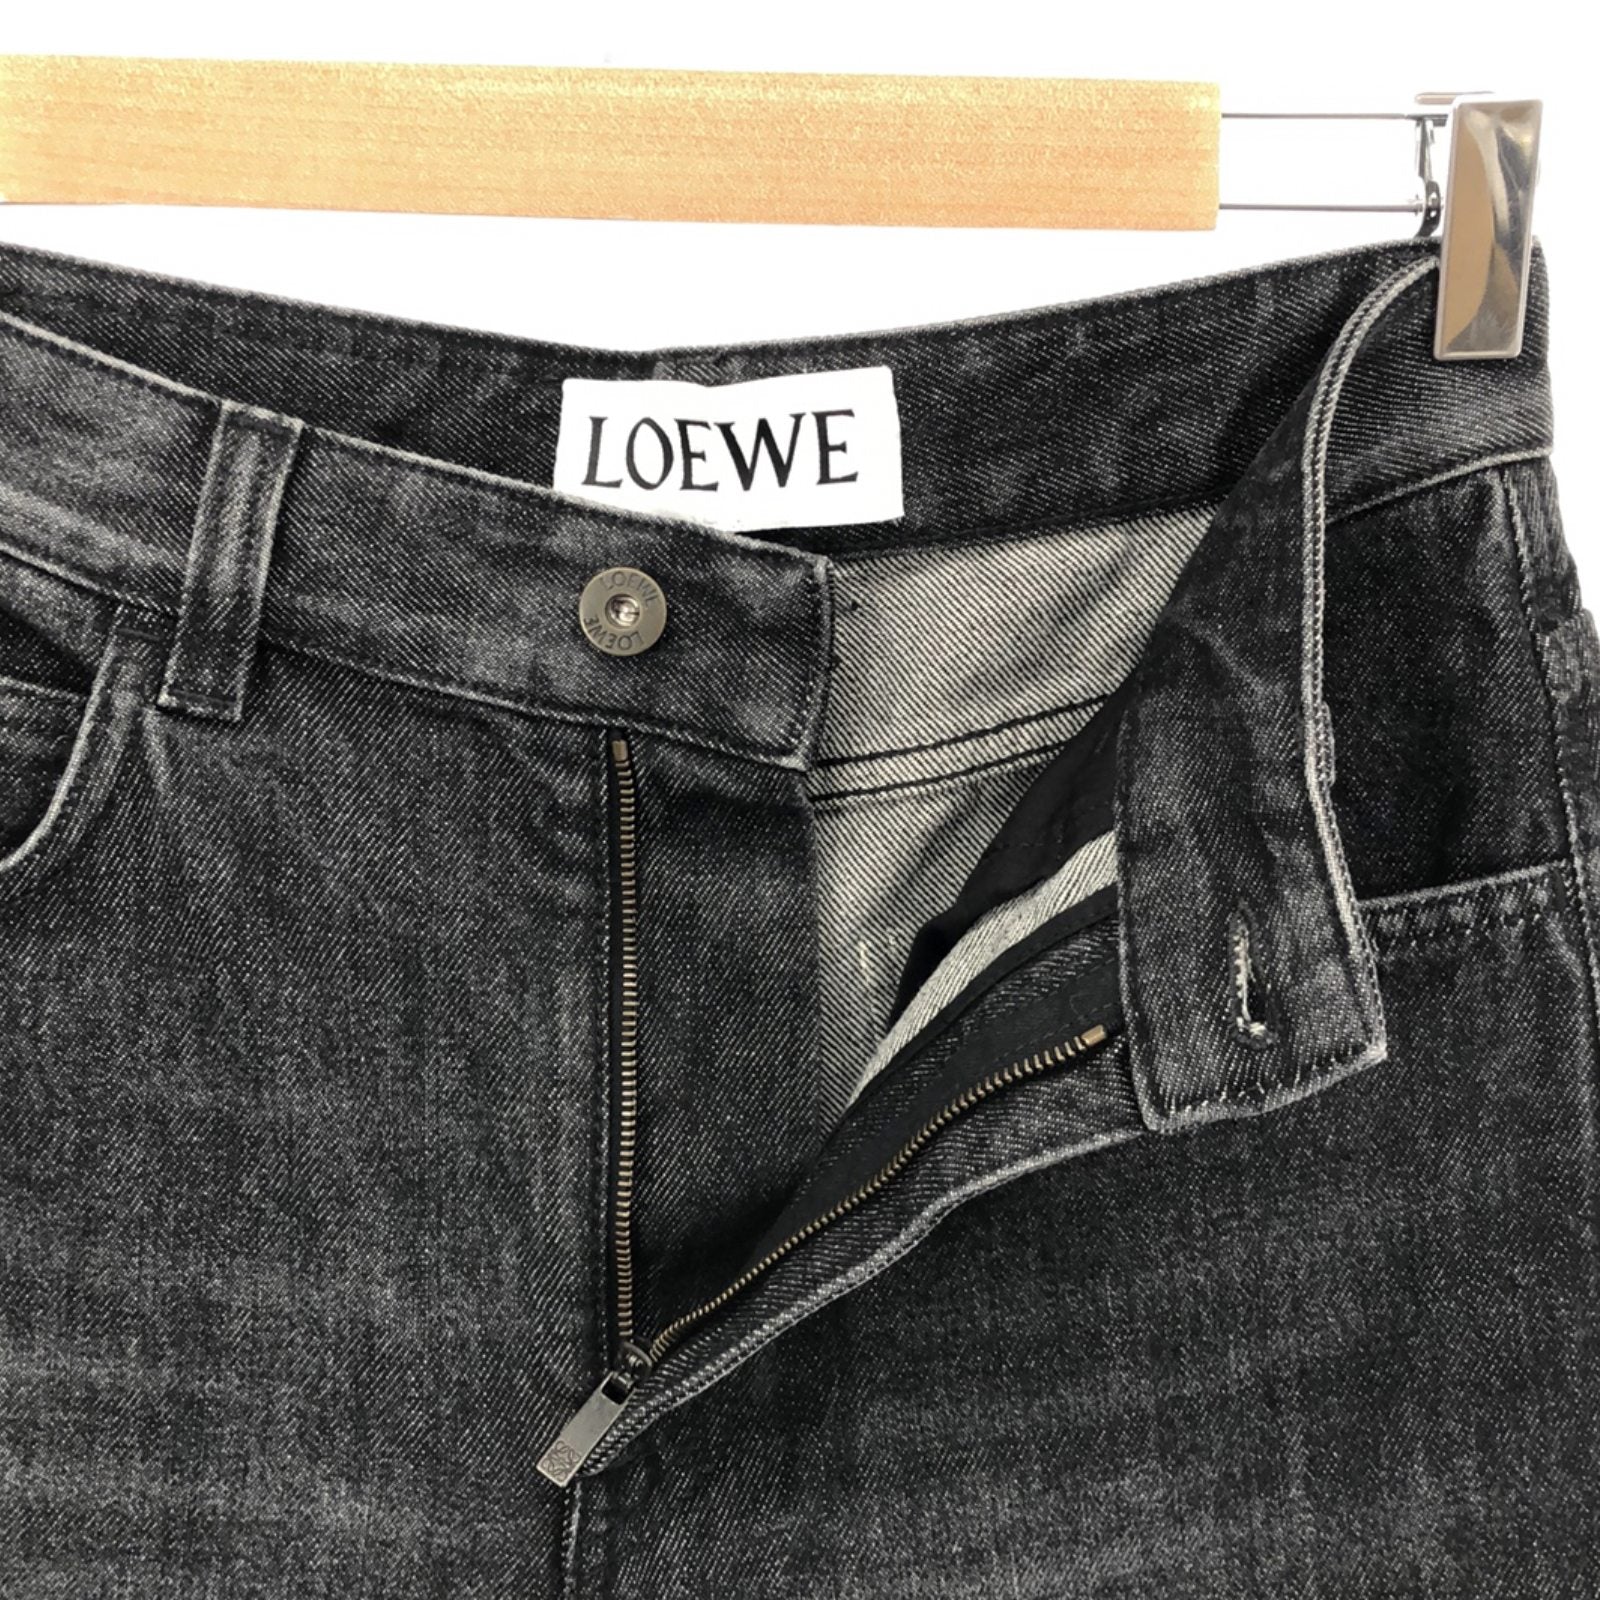 Loewe LOEWE Denim Clothes Bottoms Cotton  Black S540Y11X191100F36